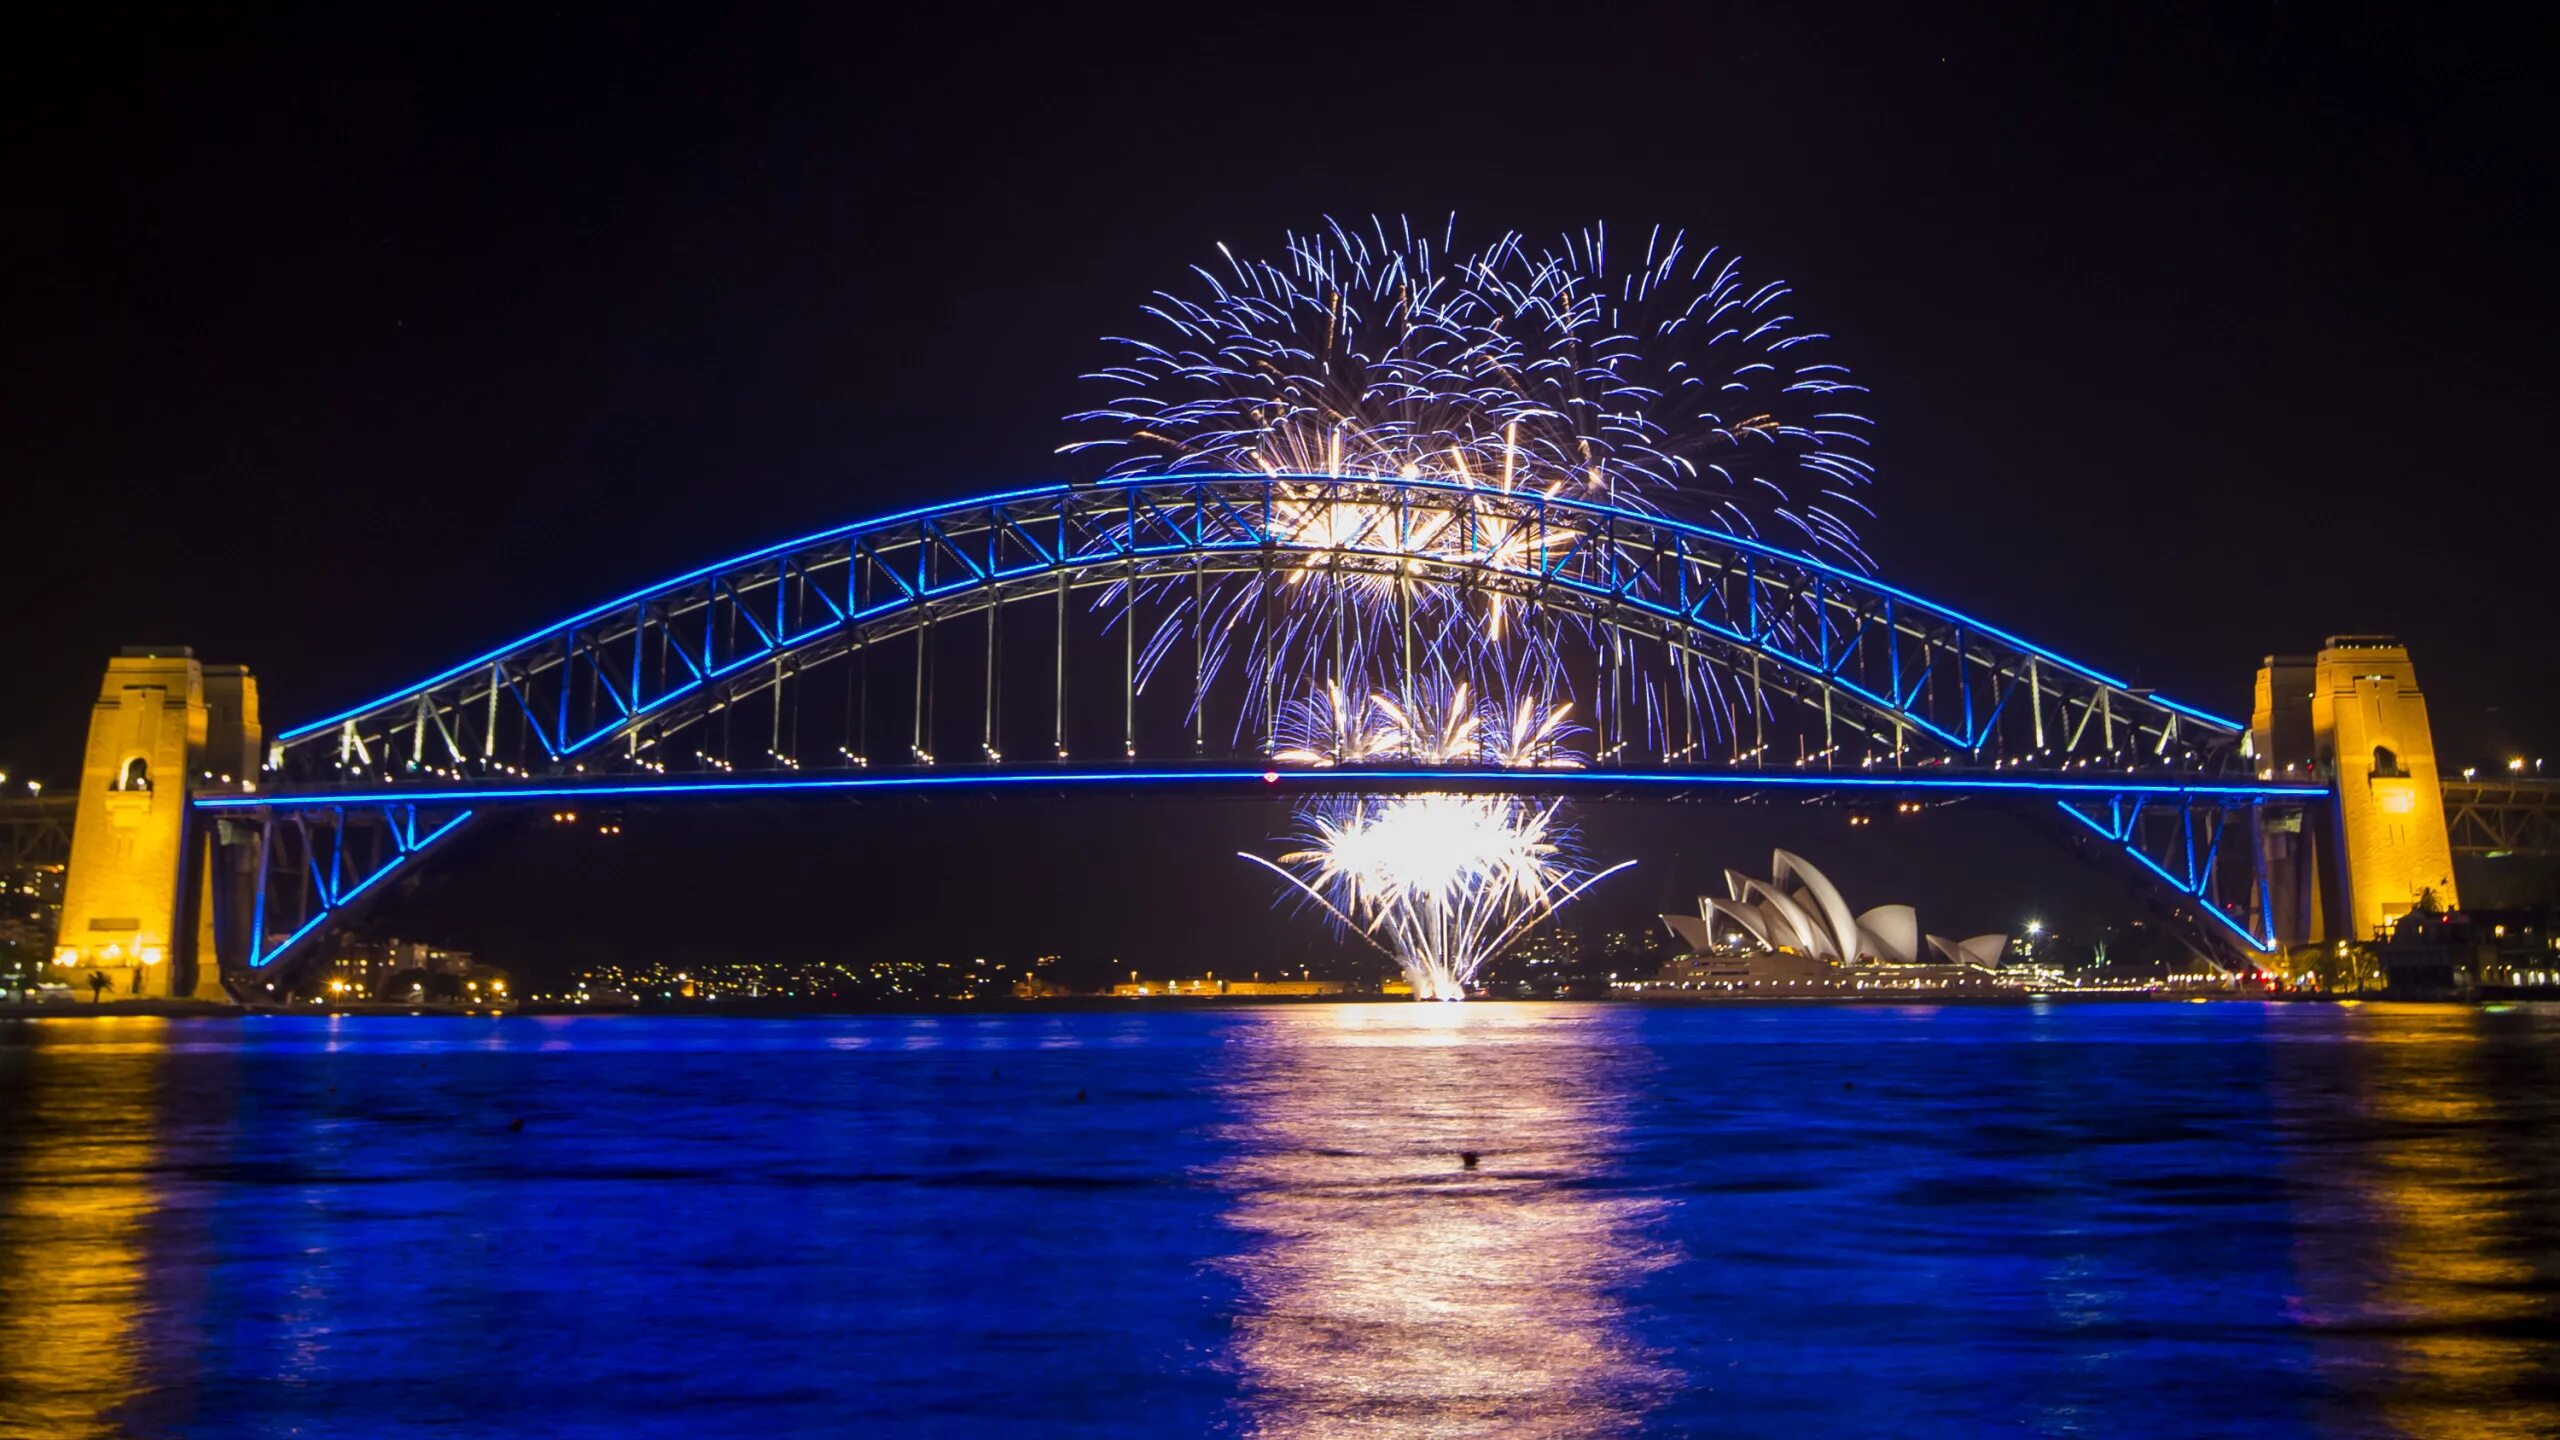 Бридж. Харбор-бридж Сидней. Сиднейский мост Харбор-бридж. Мост Харбор бридж в Австралии. Сидней мост Харбор-бридж фото.